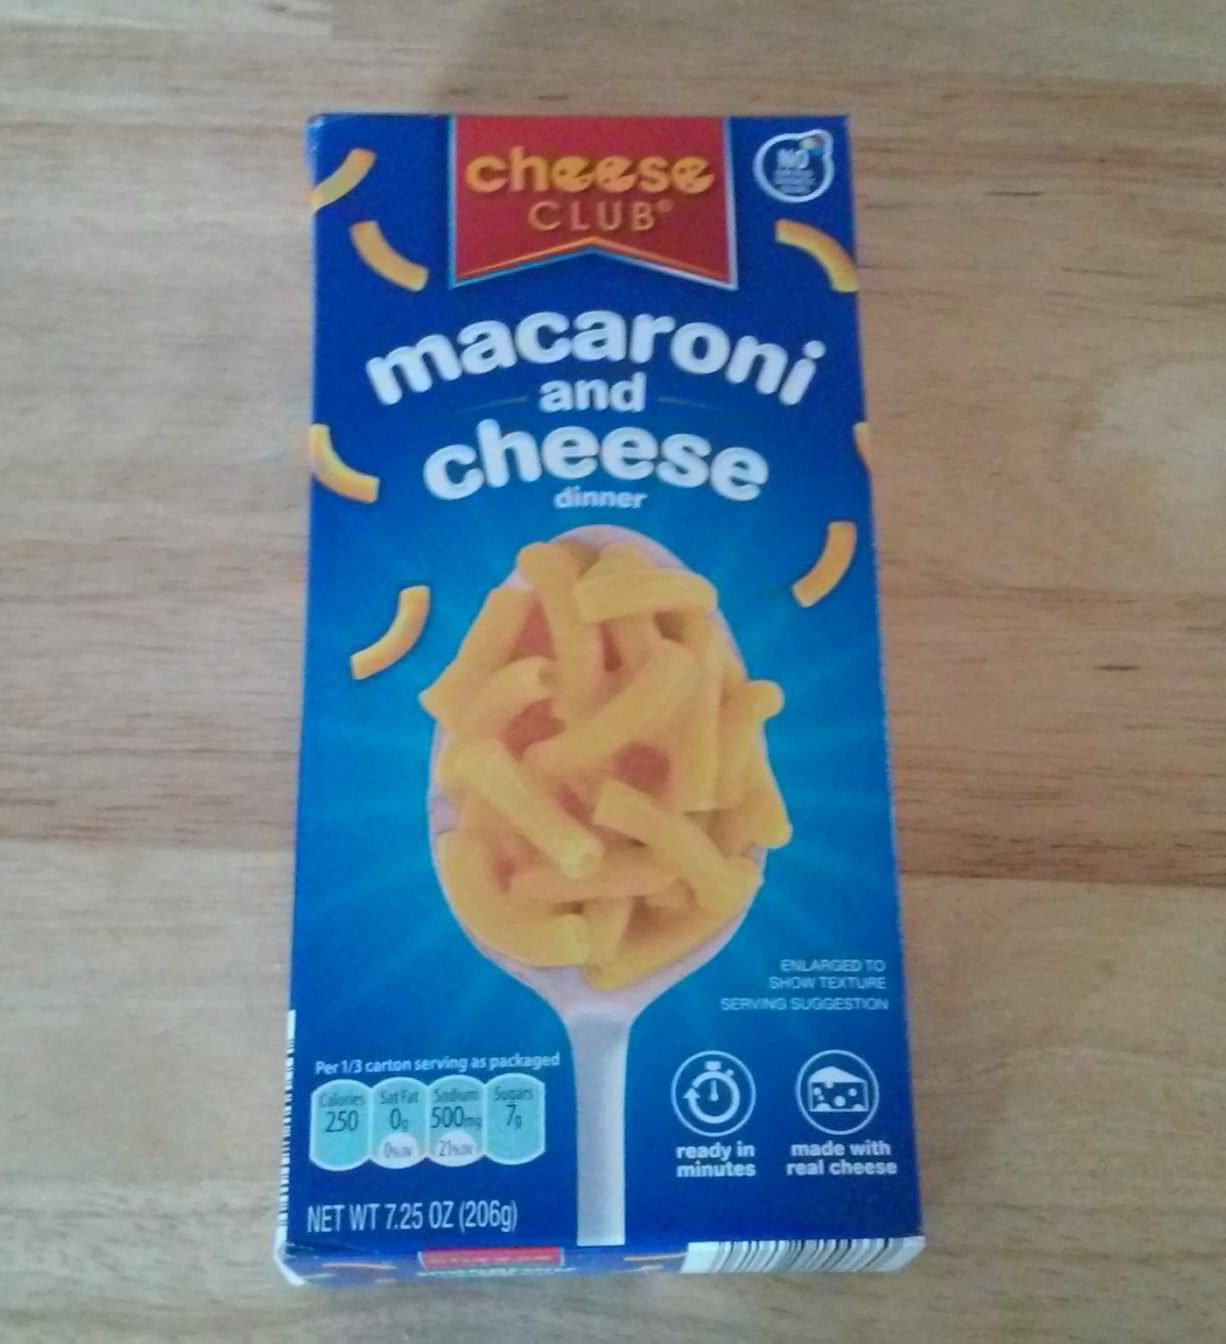 Cheese Club Macaroni and Cheese Dinner